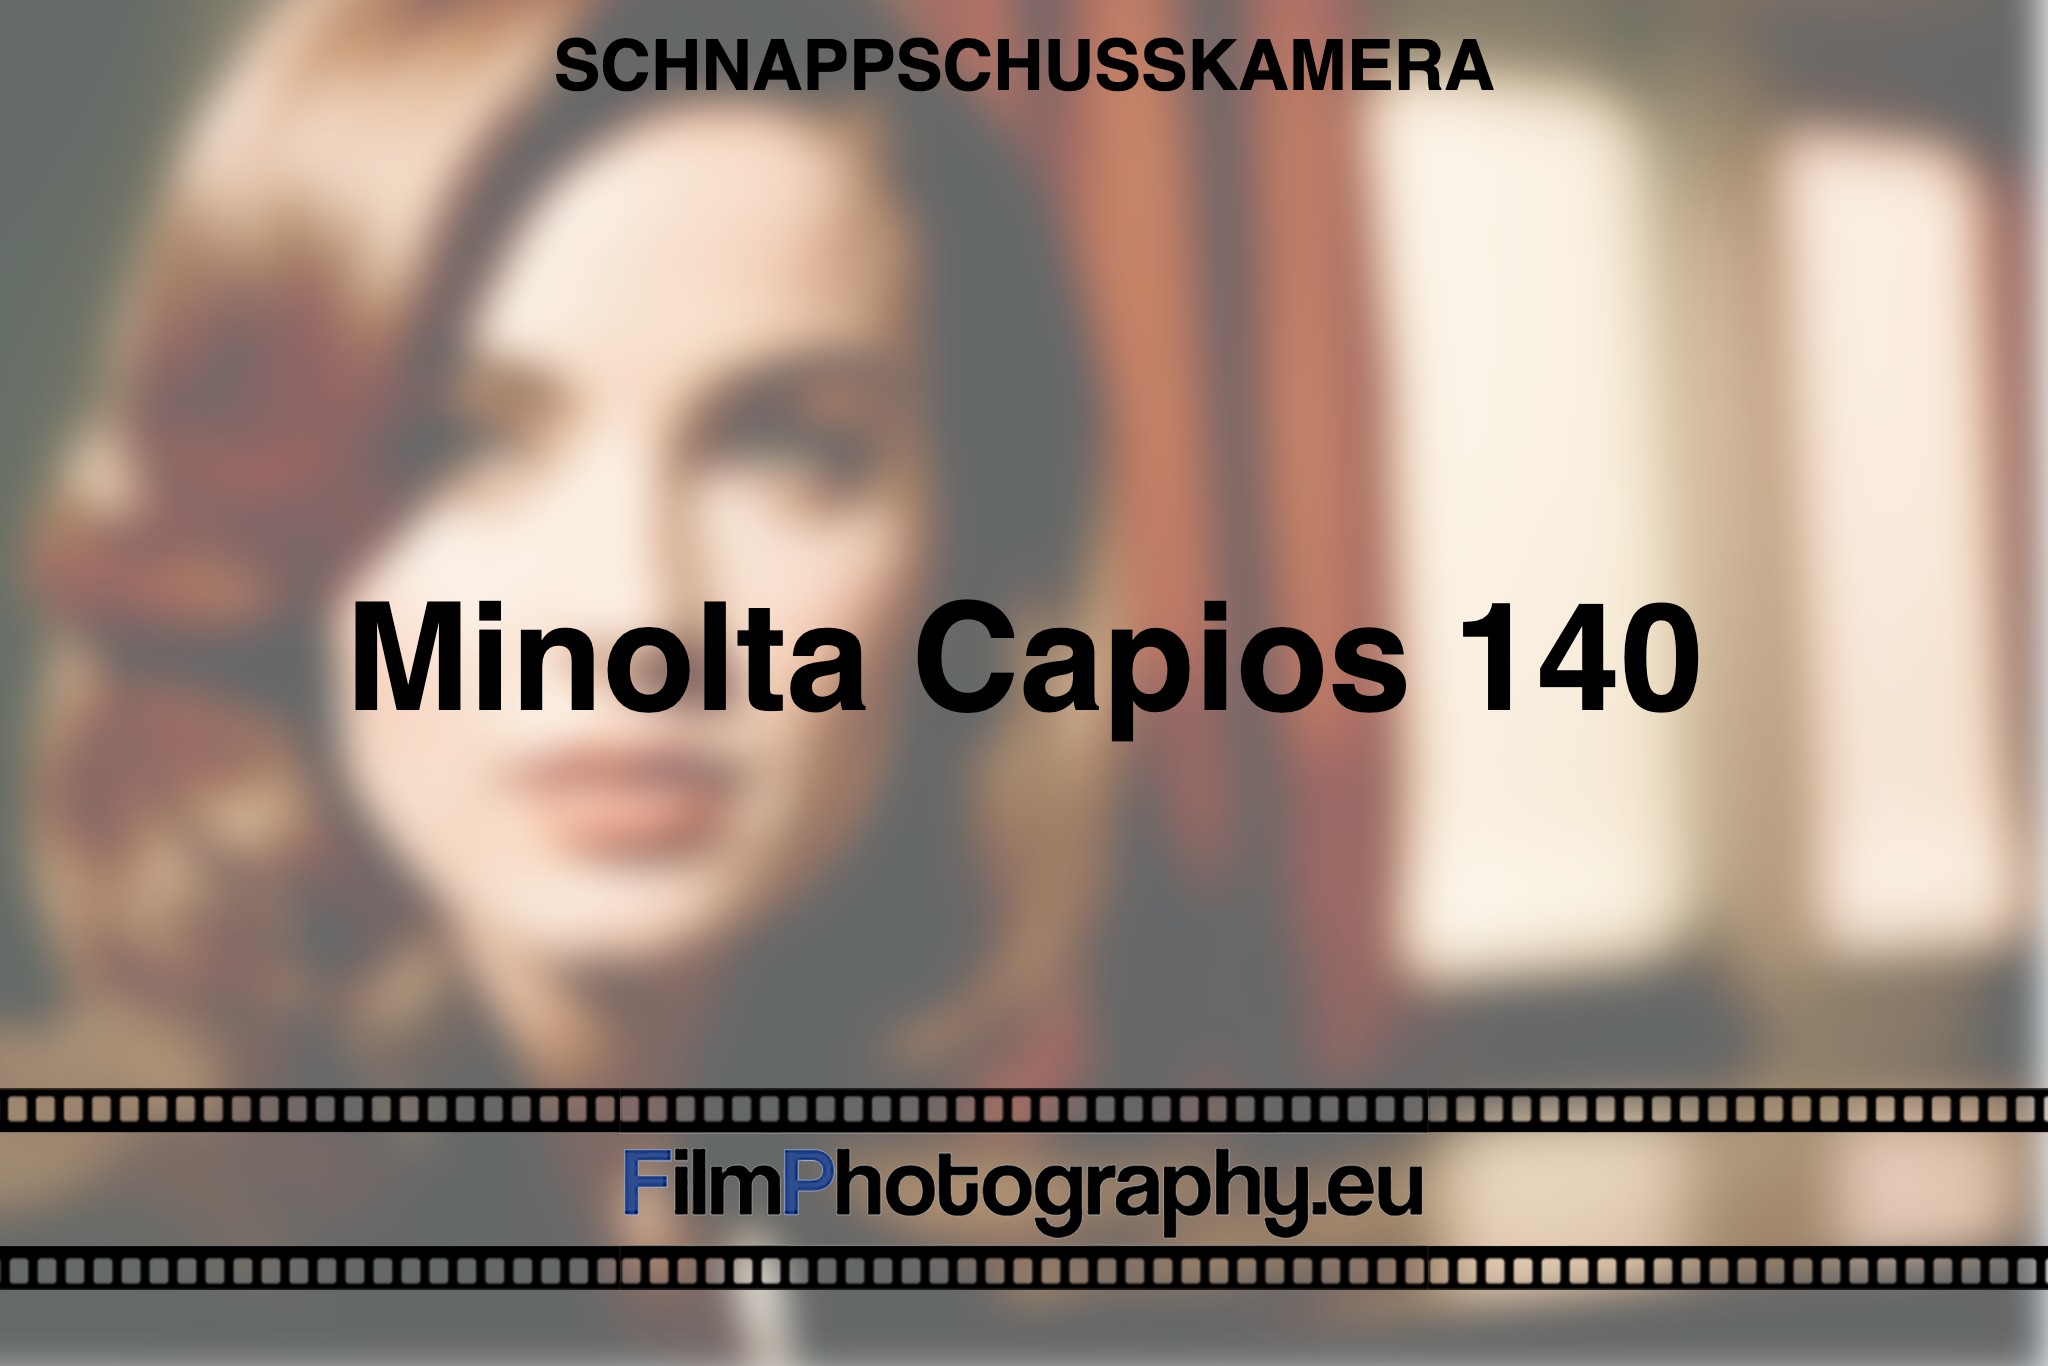 minolta-capios-140-schnappschusskamera-bnv